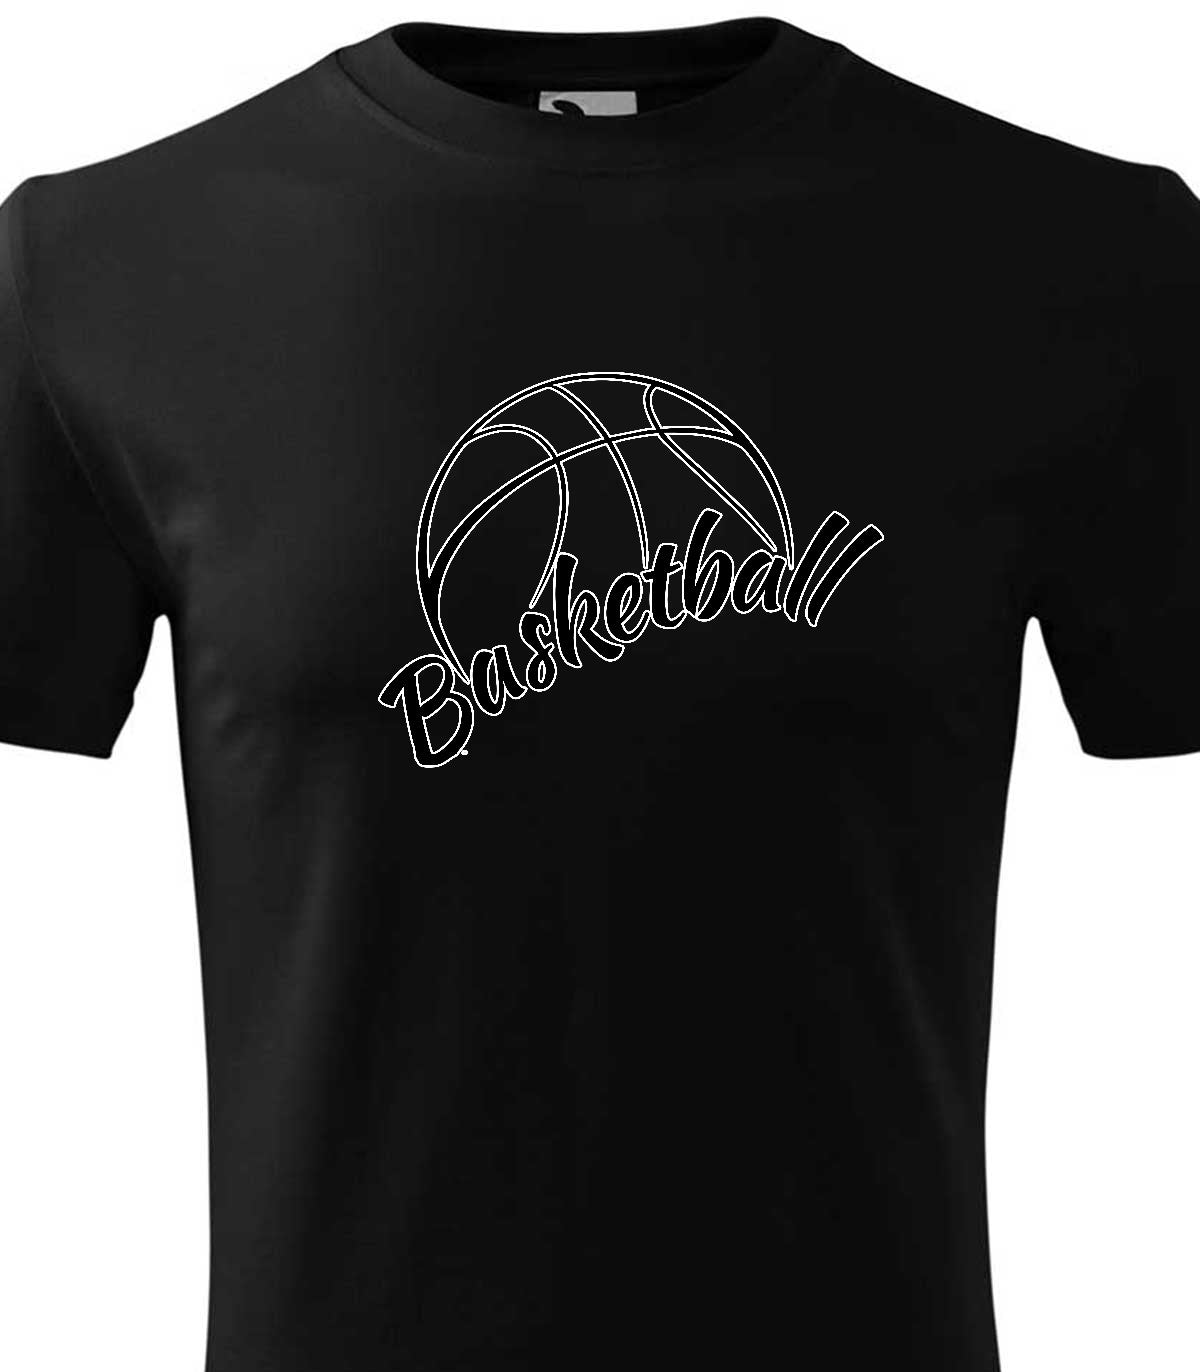 Basketball férfi technikai póló